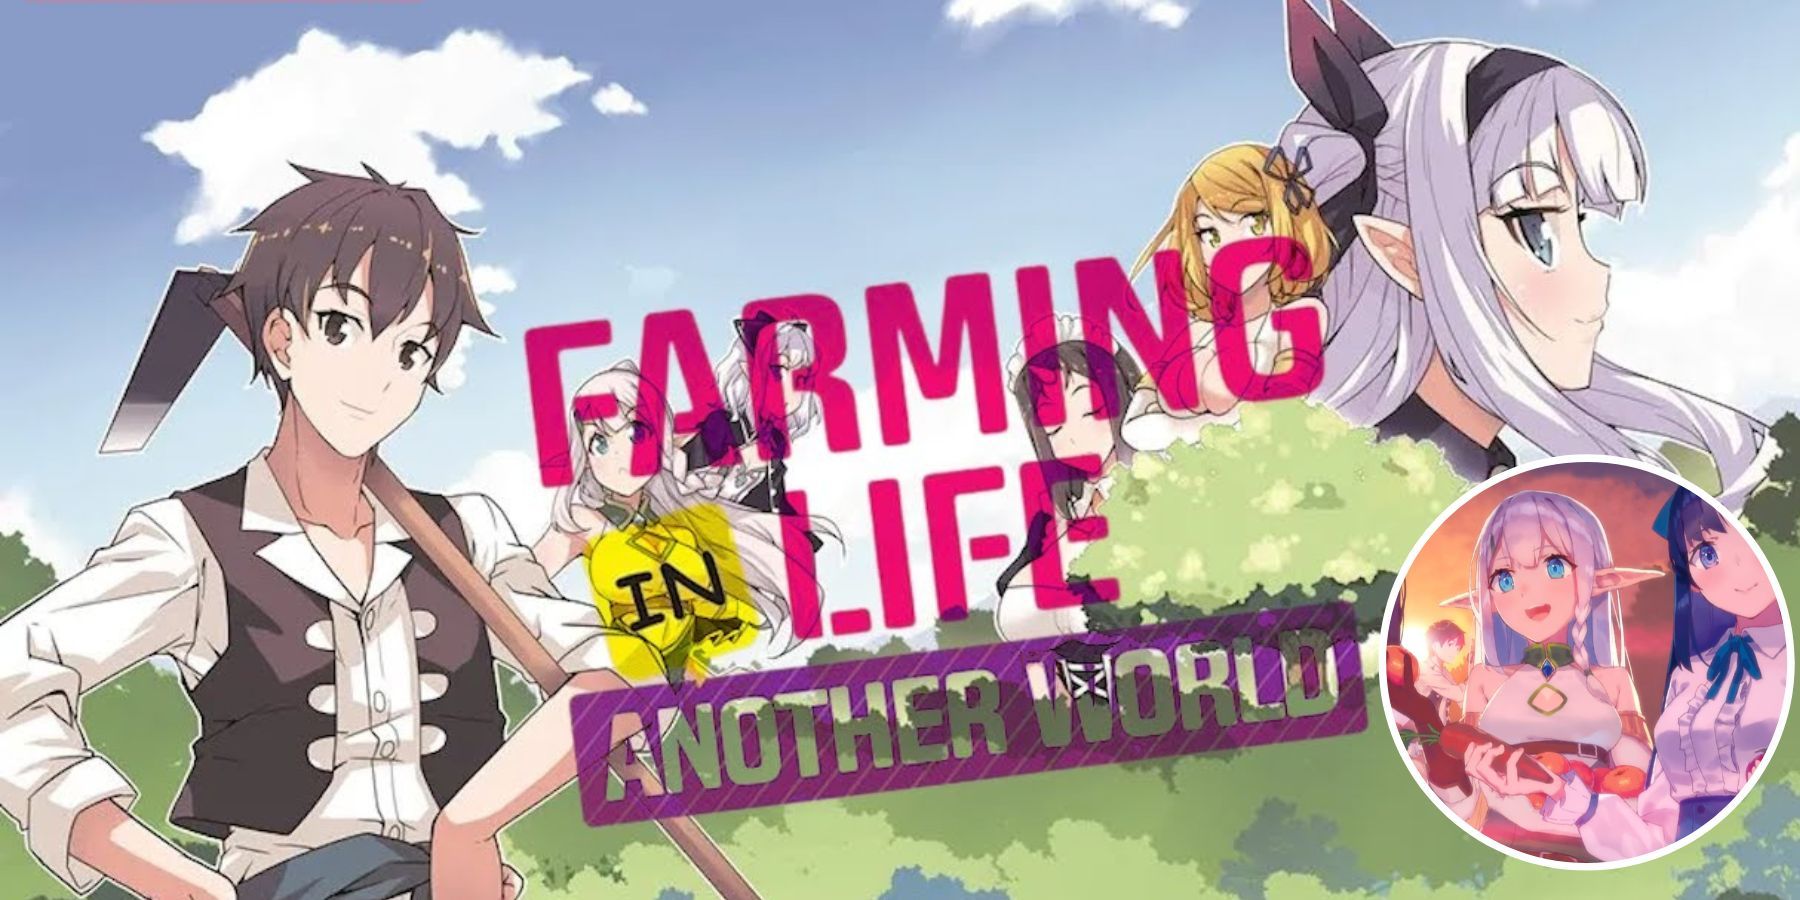 Original Anime Male Farmer by chartsid on DeviantArt-demhanvico.com.vn